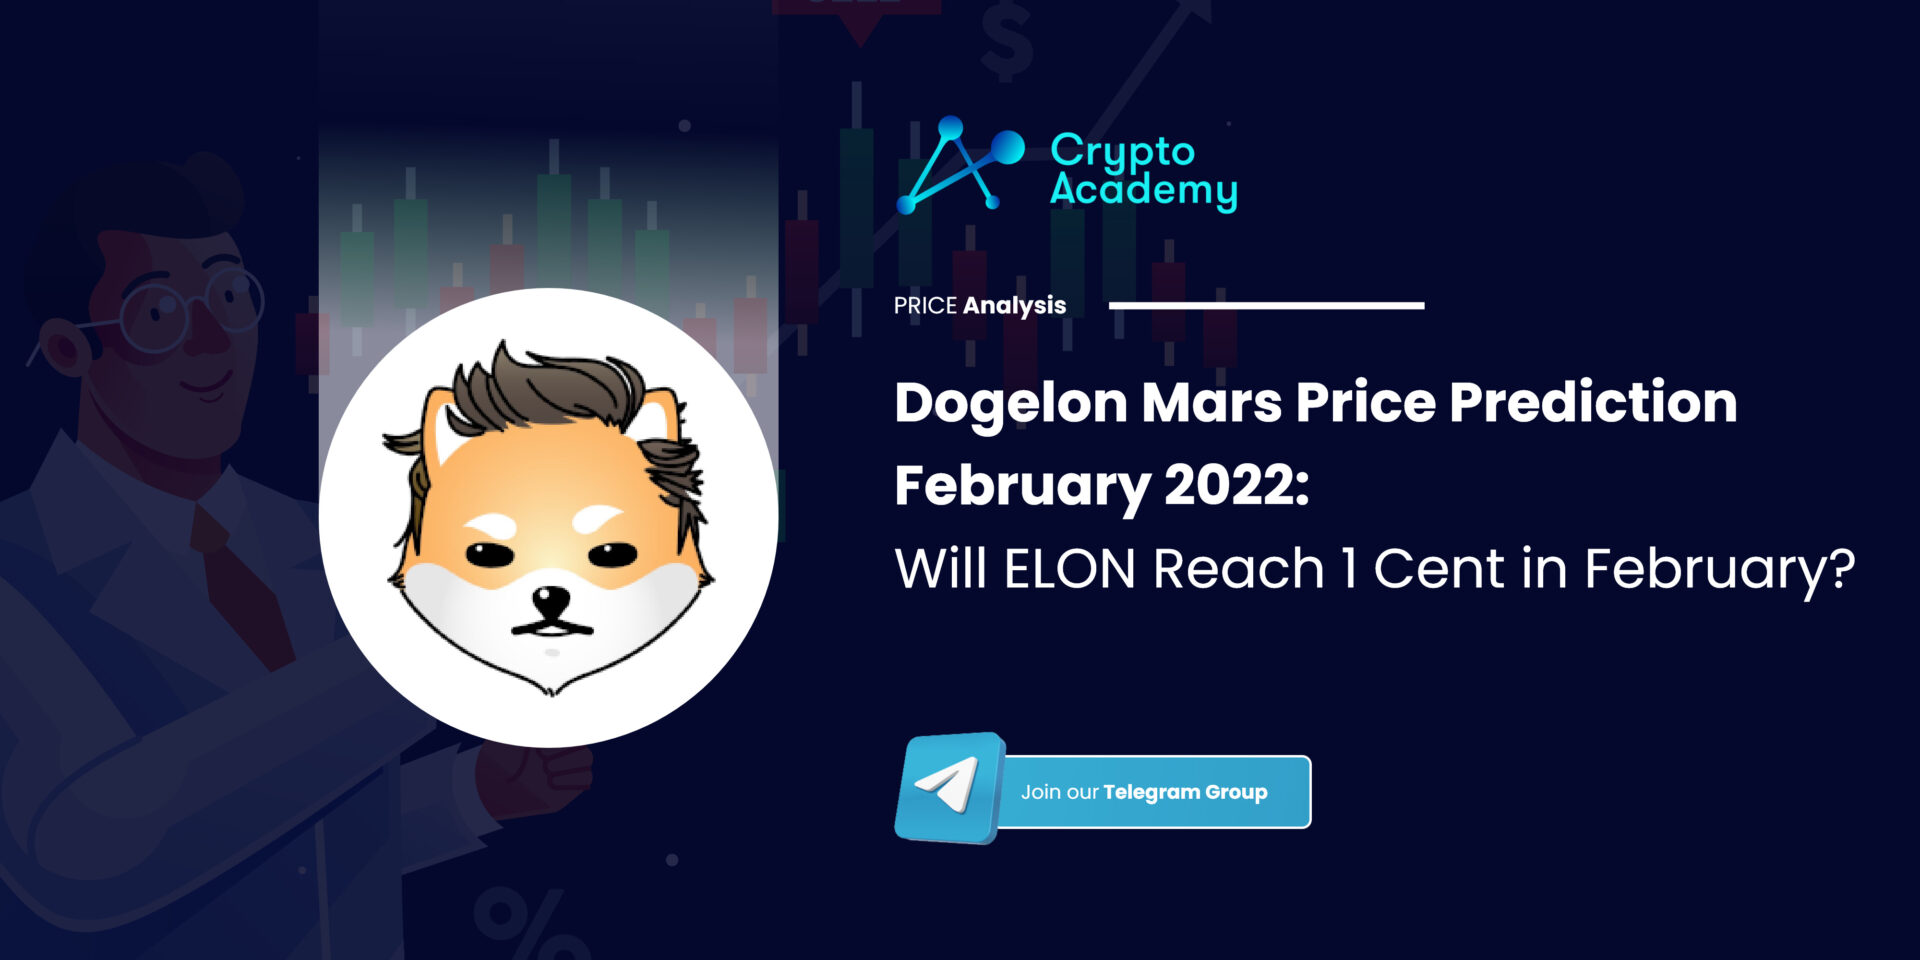 Dogelon Mars Price Prediction February 2022: Will ELON Reach 1 Cent in February?